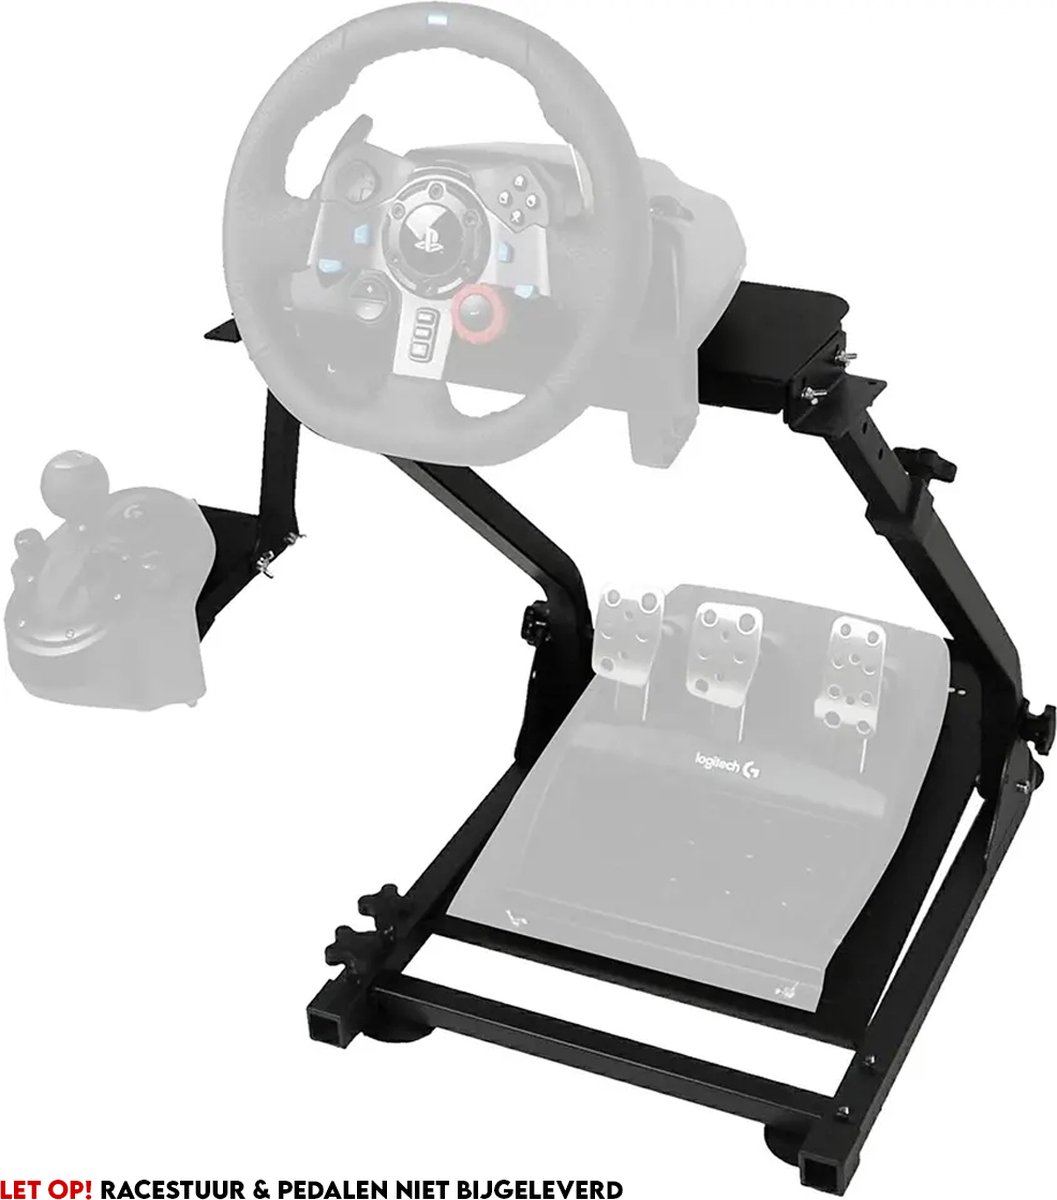 Wheel Stand - Racestuur Standaard houder - Racestoel - Racestuur - Voor Gameconsoles & PC (Exclusief racestuur)